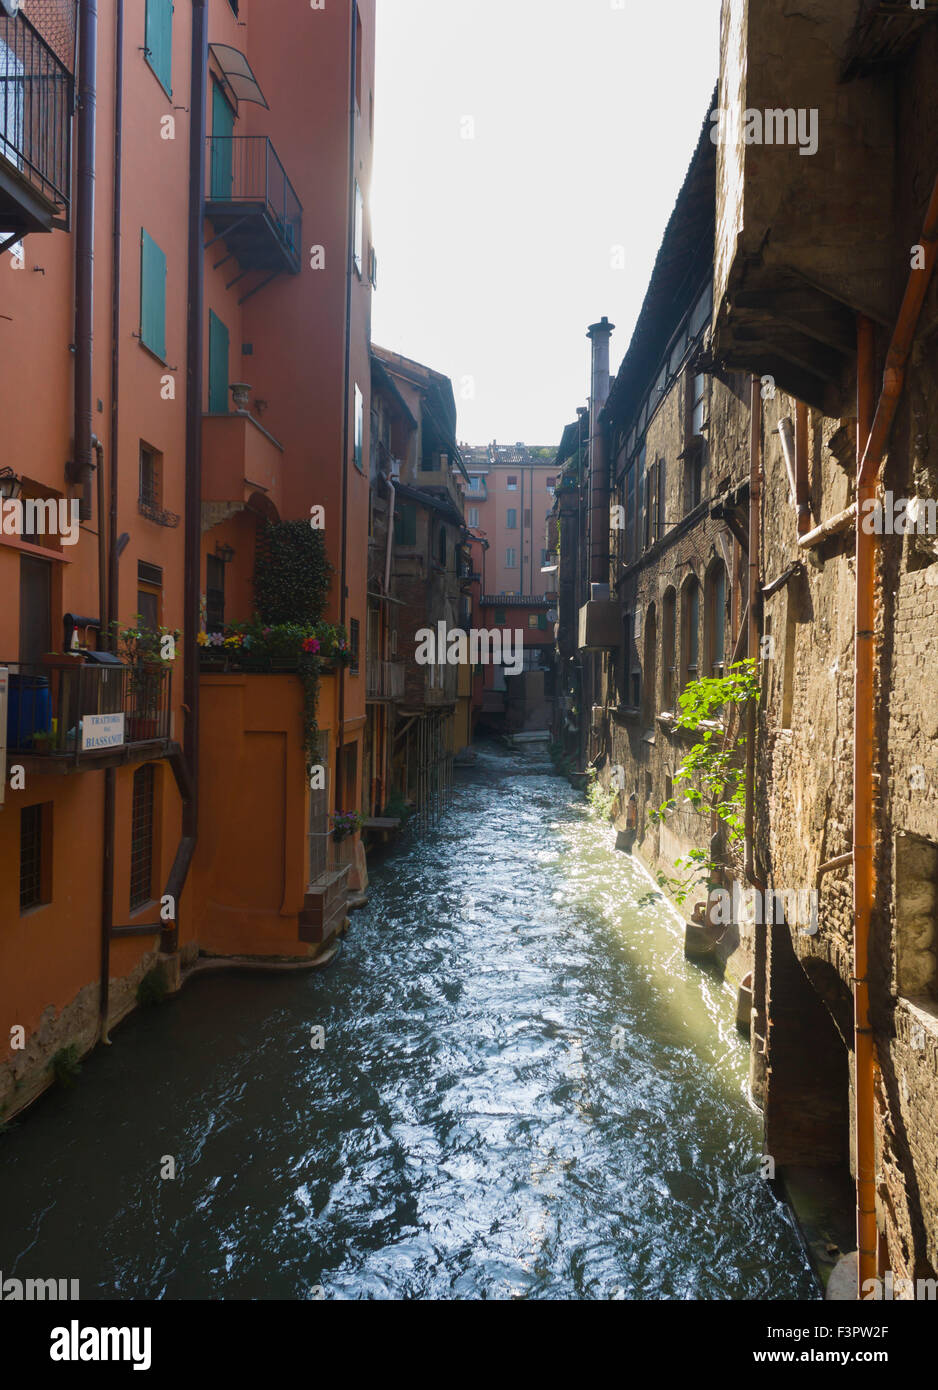 Italy, Emilia-Romagna region, Bologna - river canal in city. Stock Photo